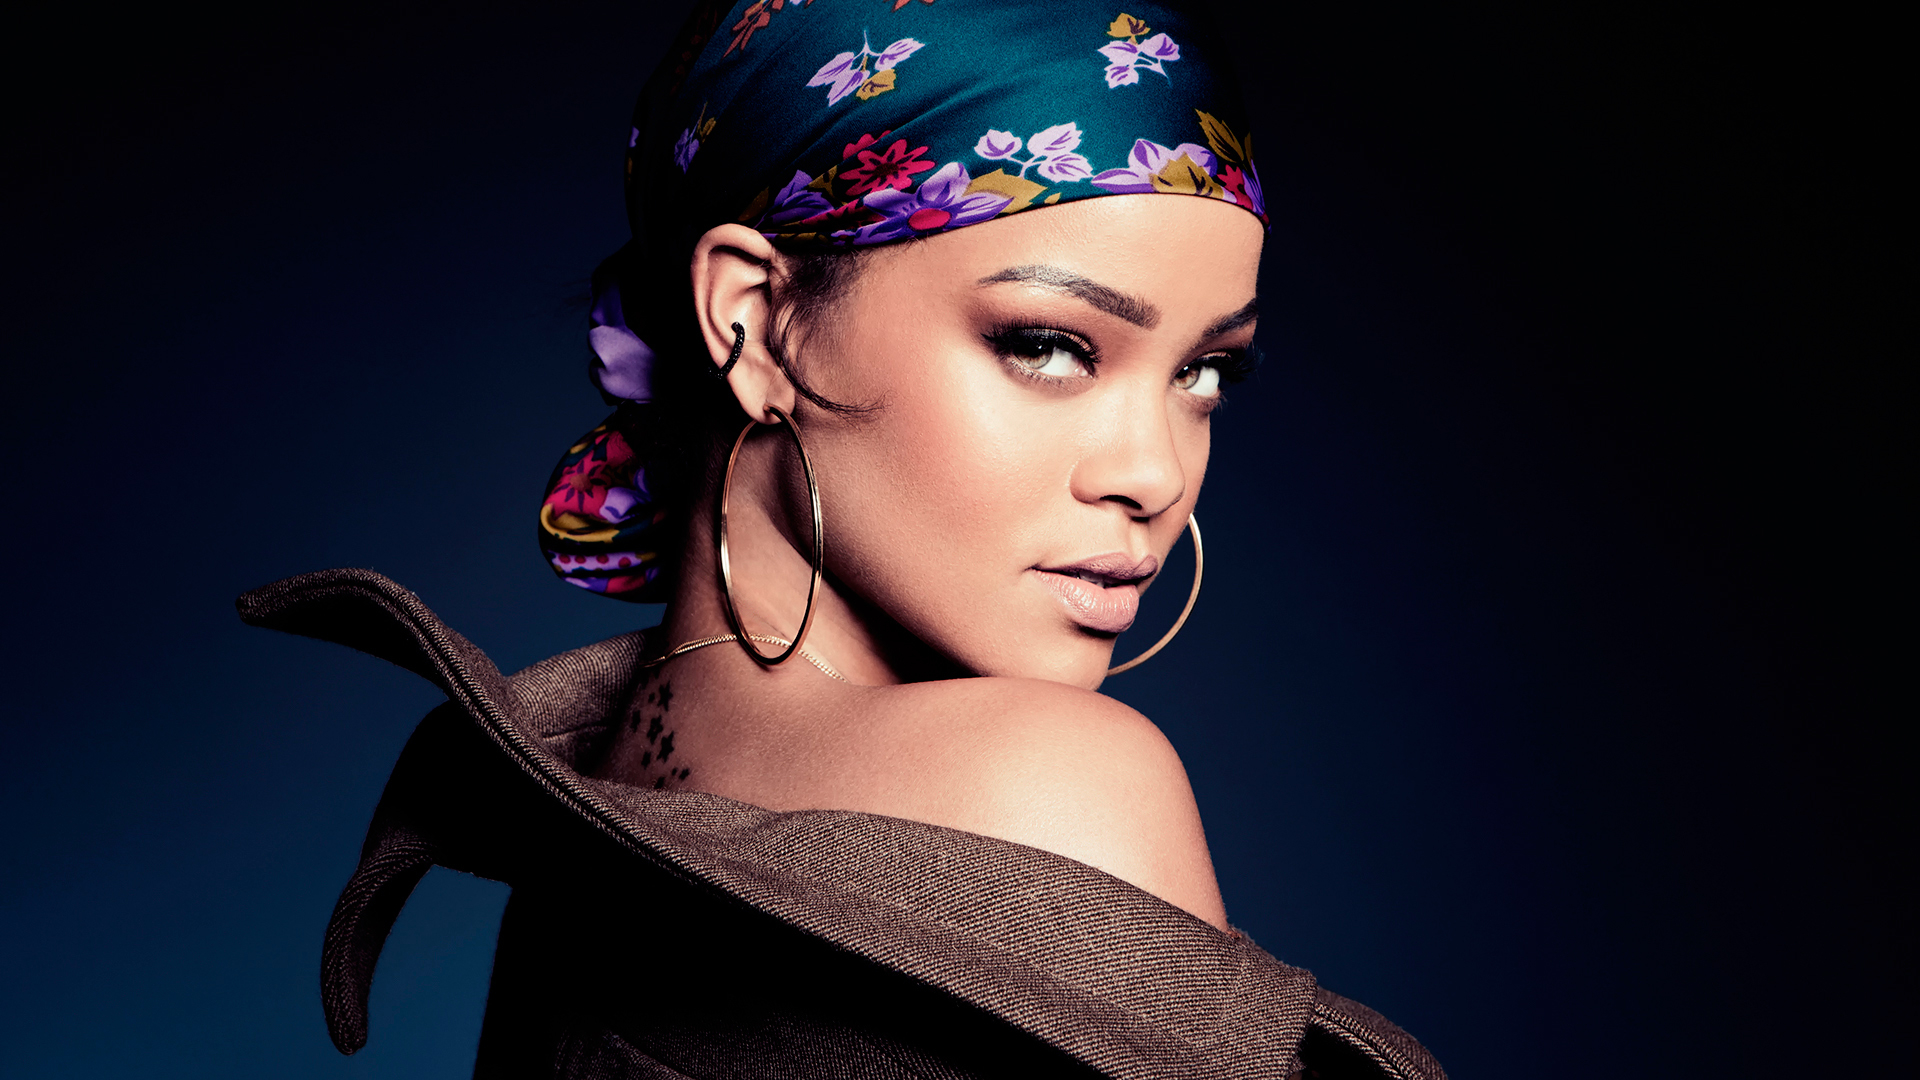 1920x1080 Wallpaper : Rihanna, saturday night live, singer, face wallup 1001119 HD Wallpapers